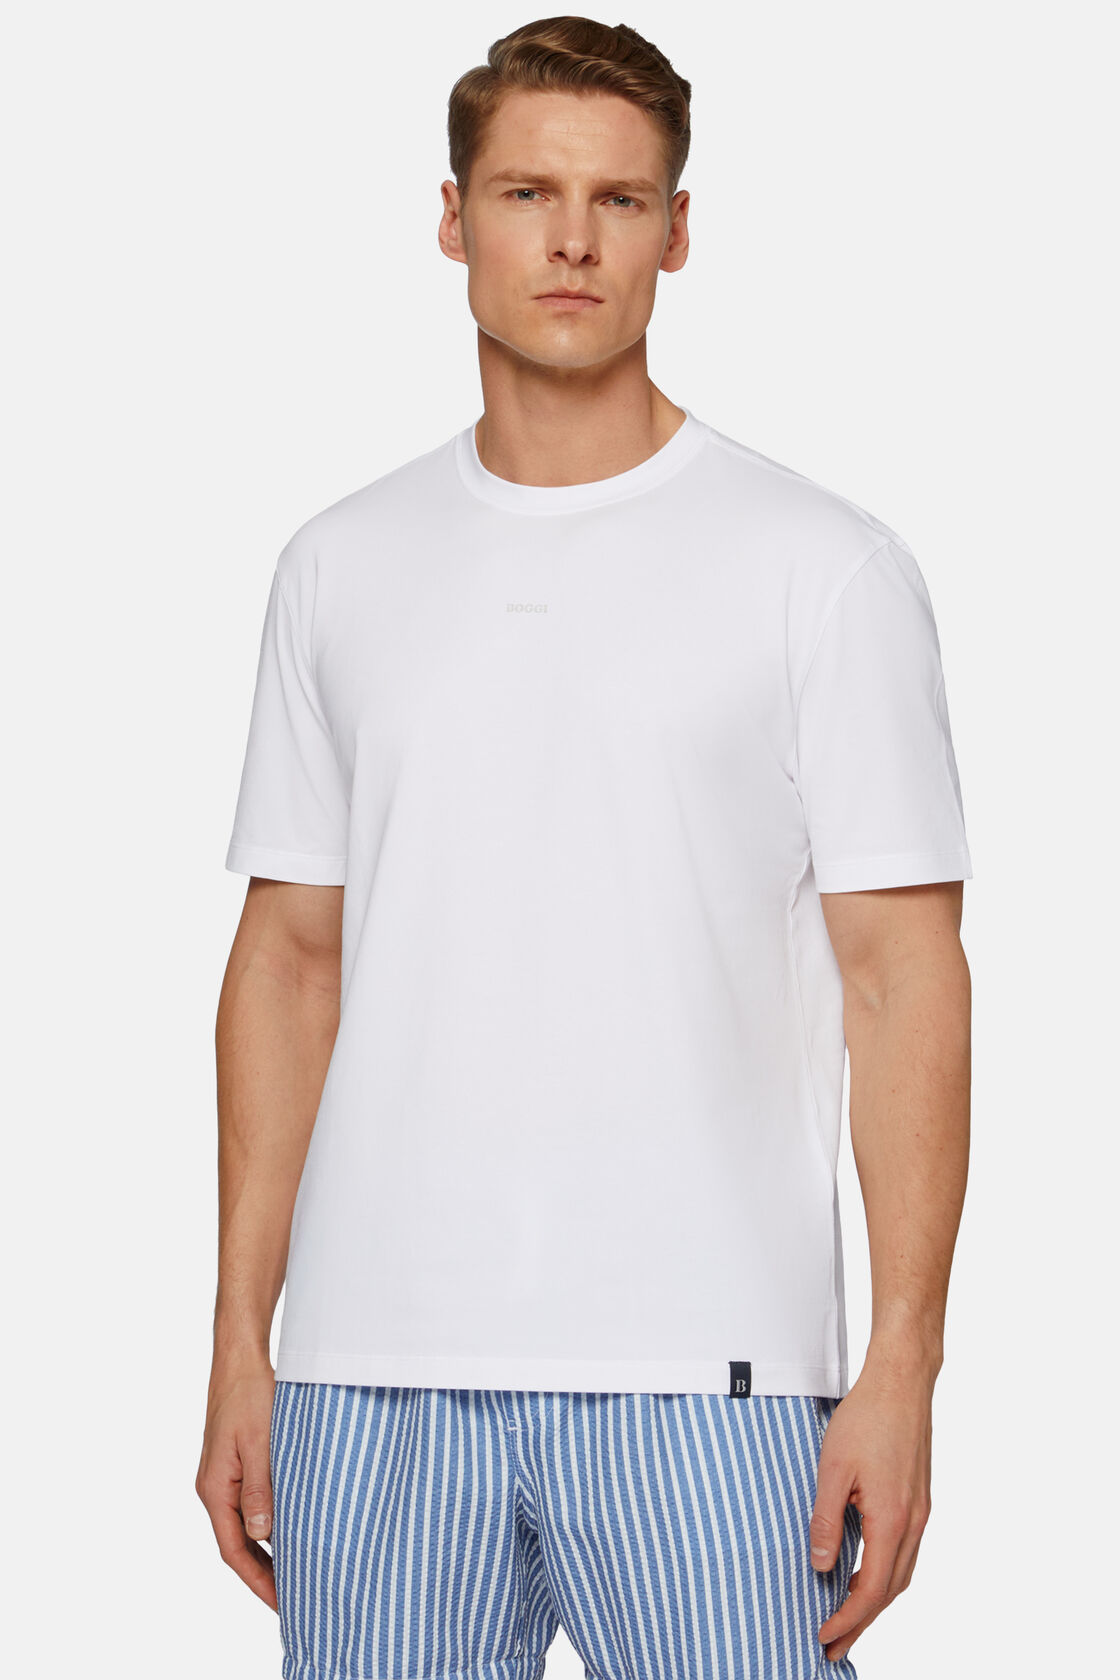 T-shirt in stretch supima katoen, White, hi-res